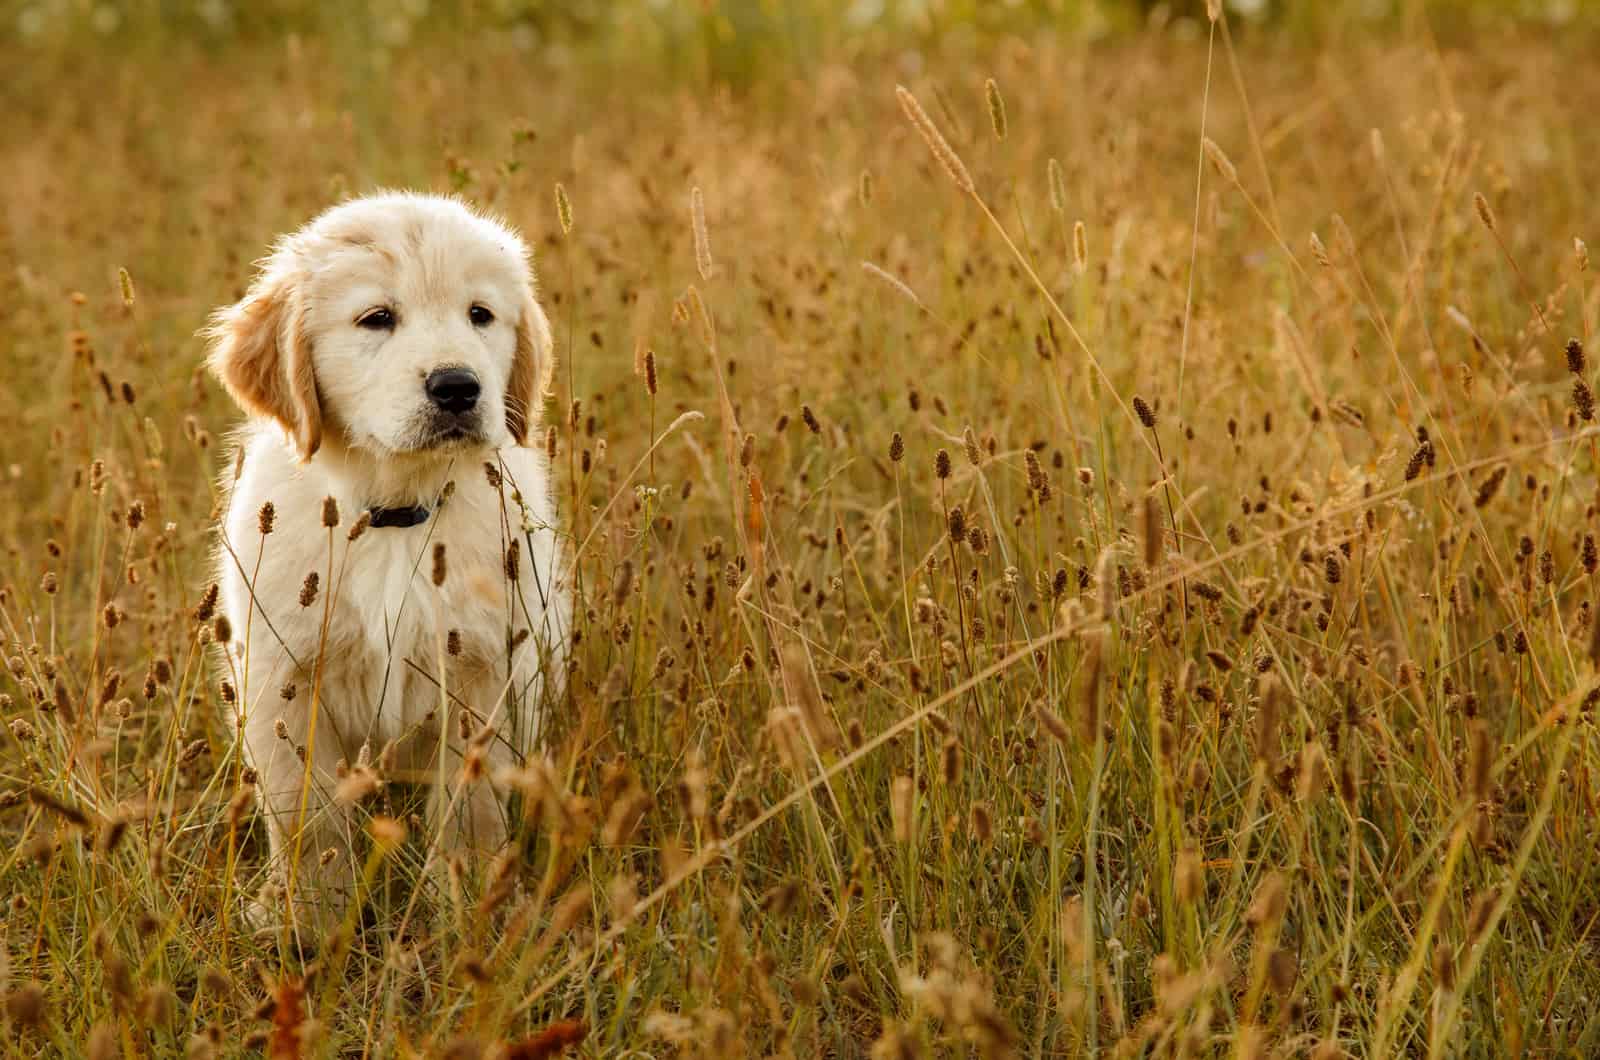 A golden retriever puppy is standing in a field